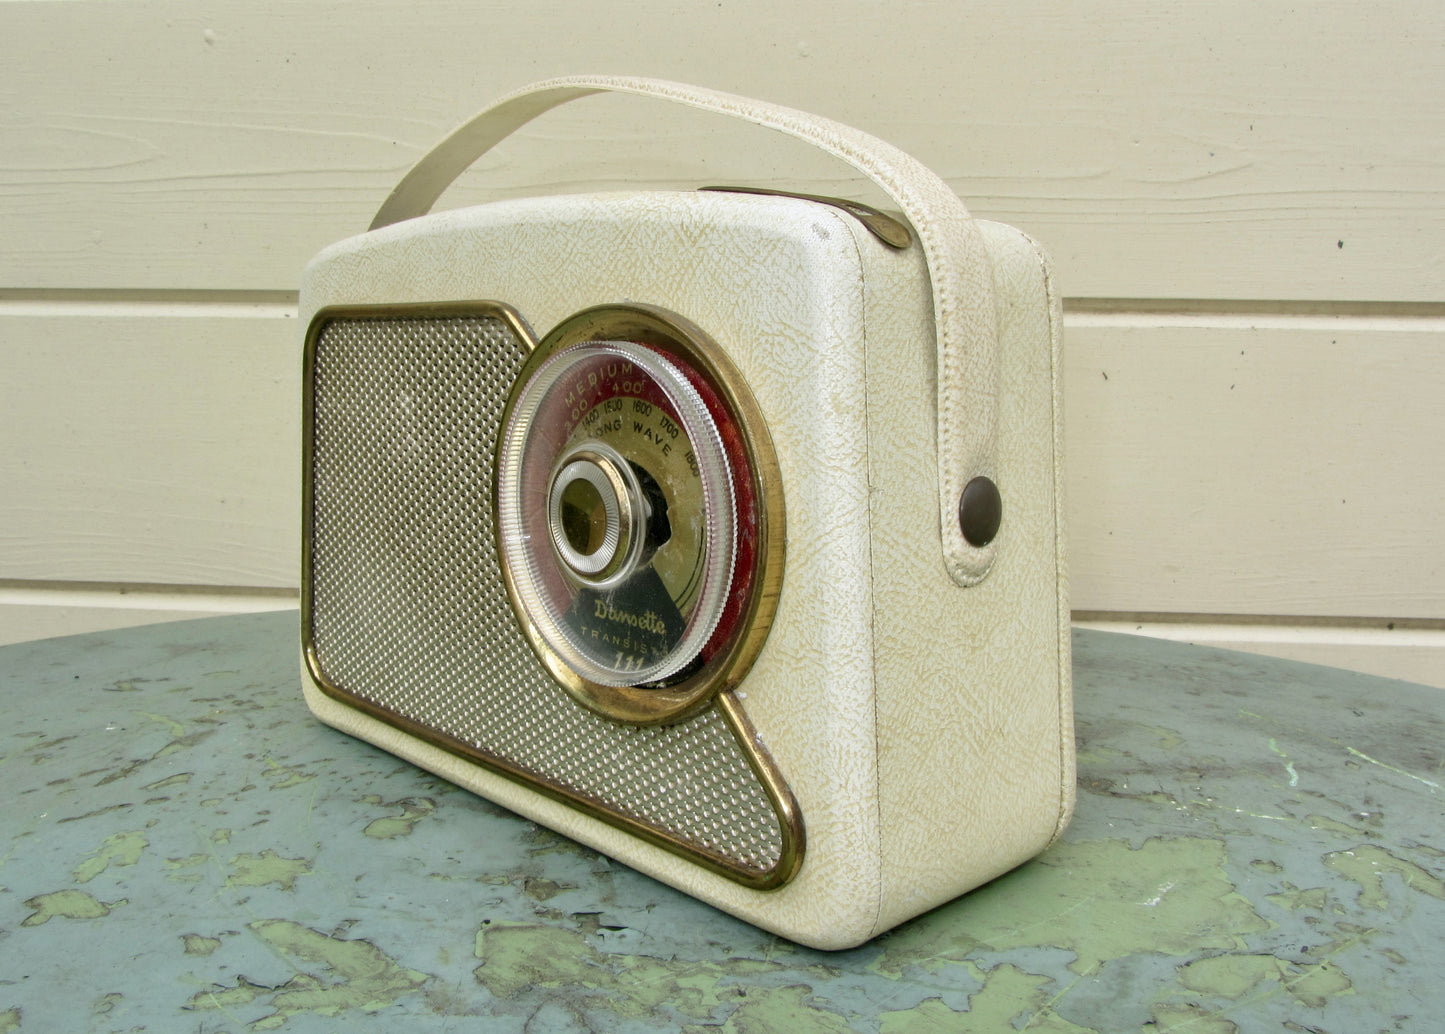 1959 Dansette RT111 Portable Radio With Cream Finish